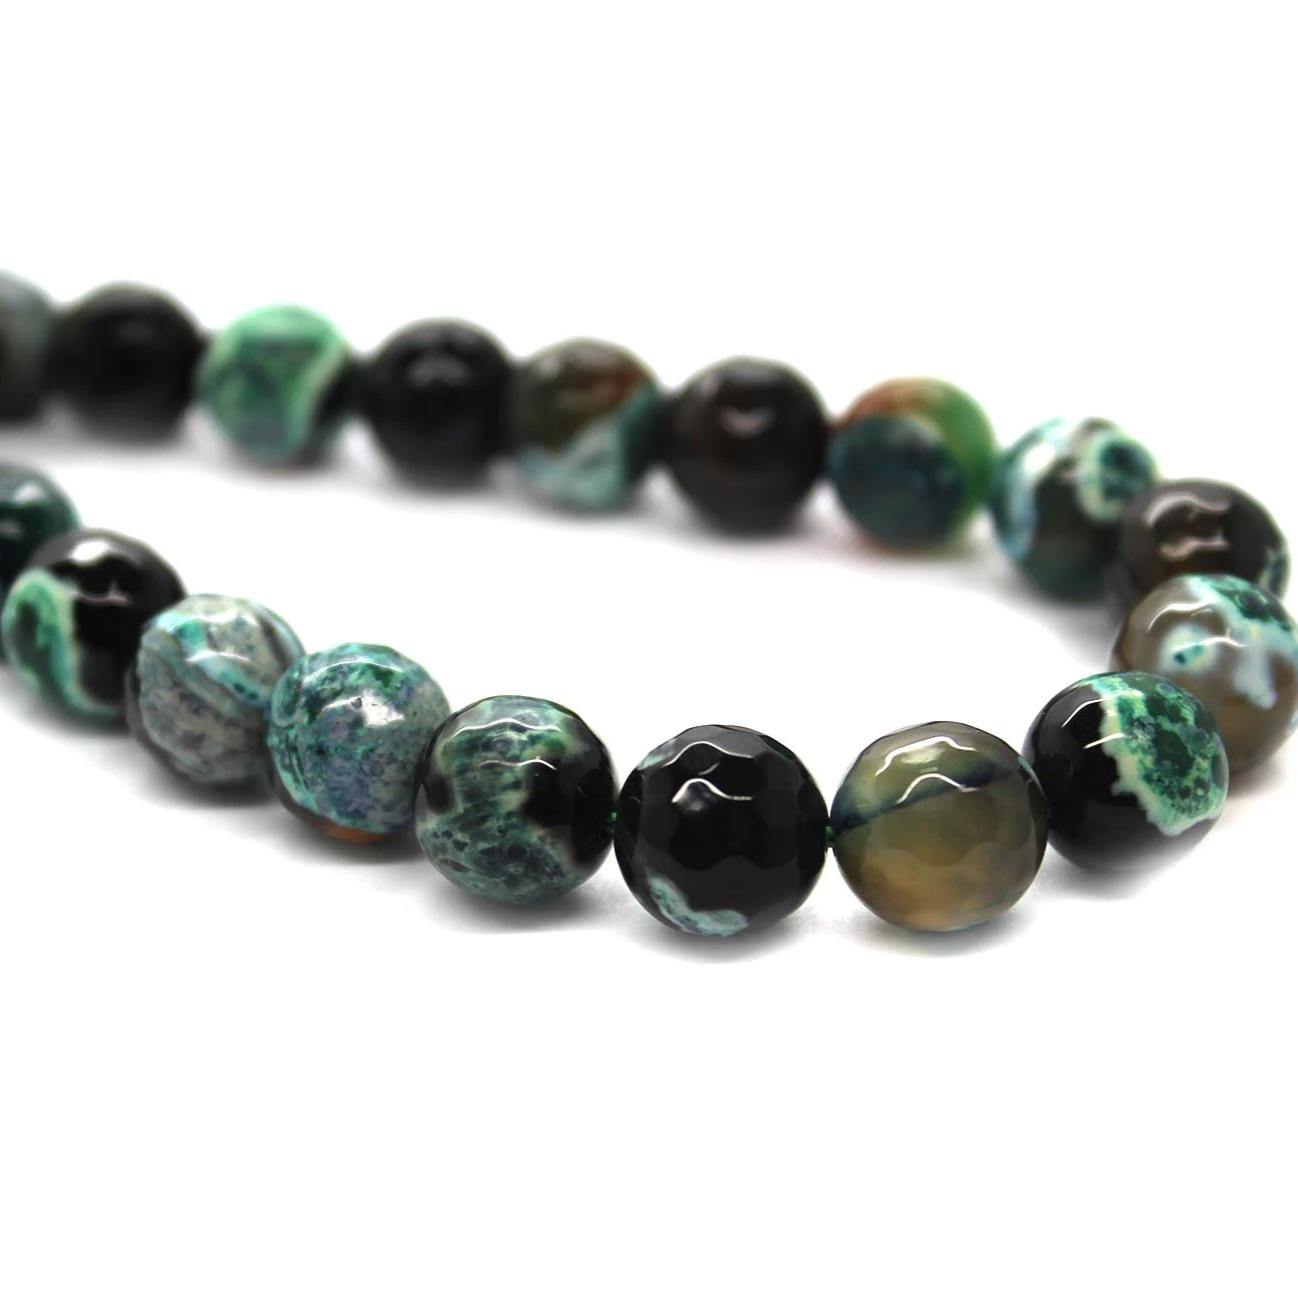 Agate Faceted - Dark Green Fire Agate, Semi-Precious Stone, 10mm, 38 pcs per strand - Butterfly Beads